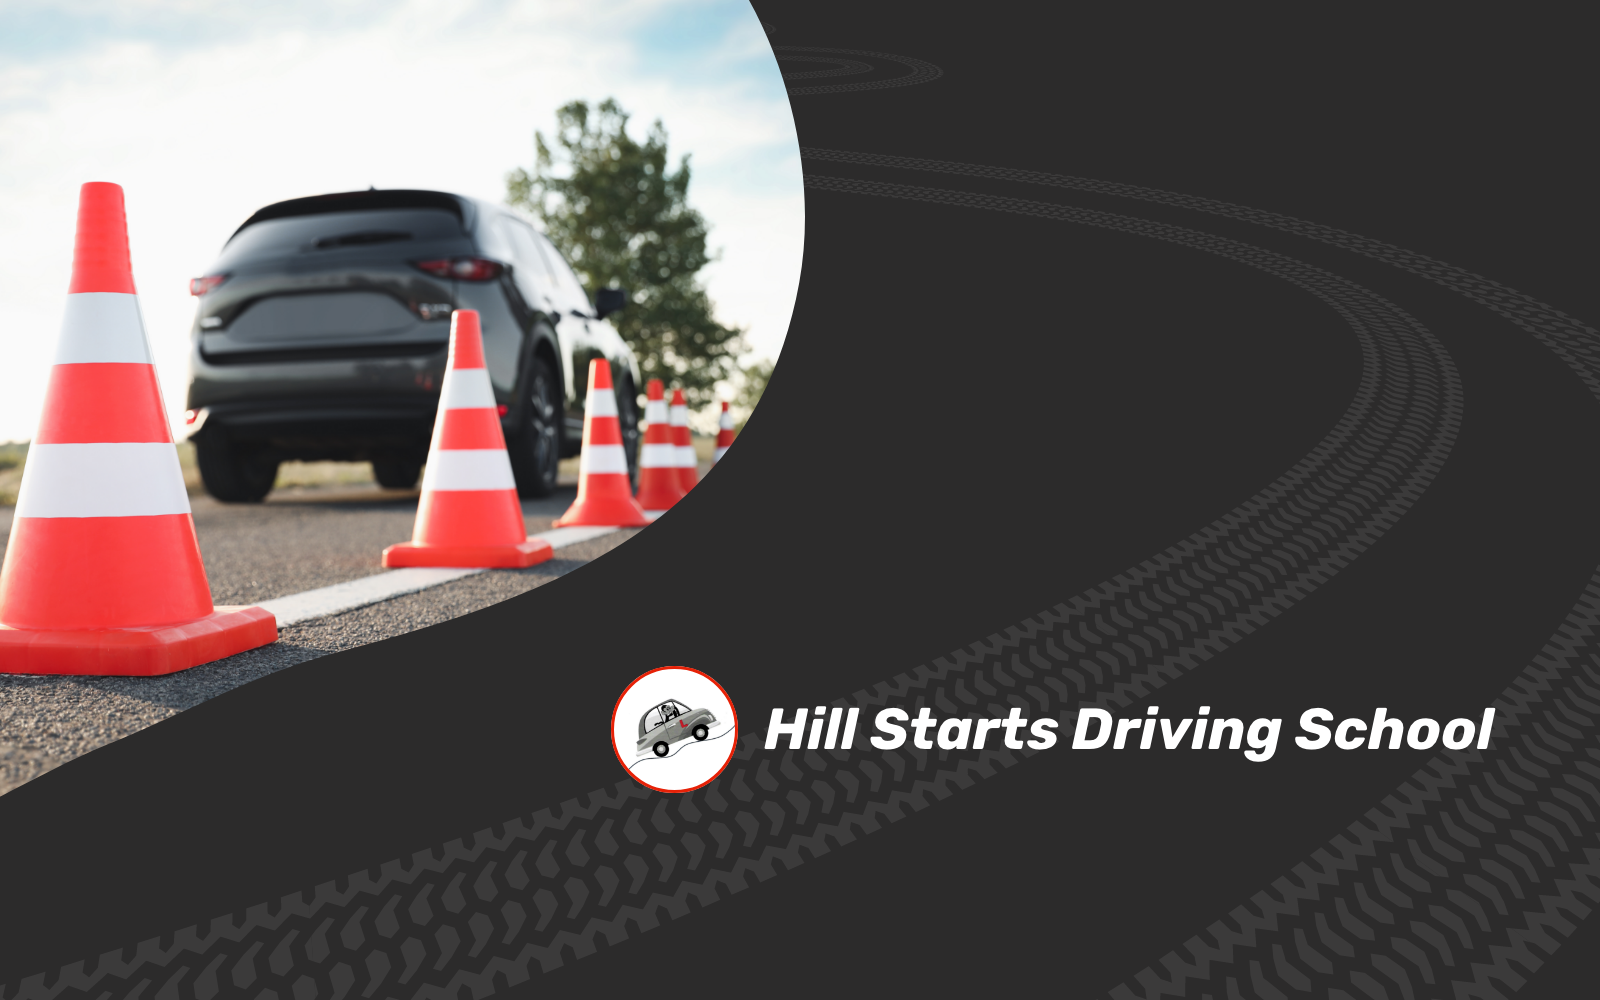 Hill Starts Driving School Image